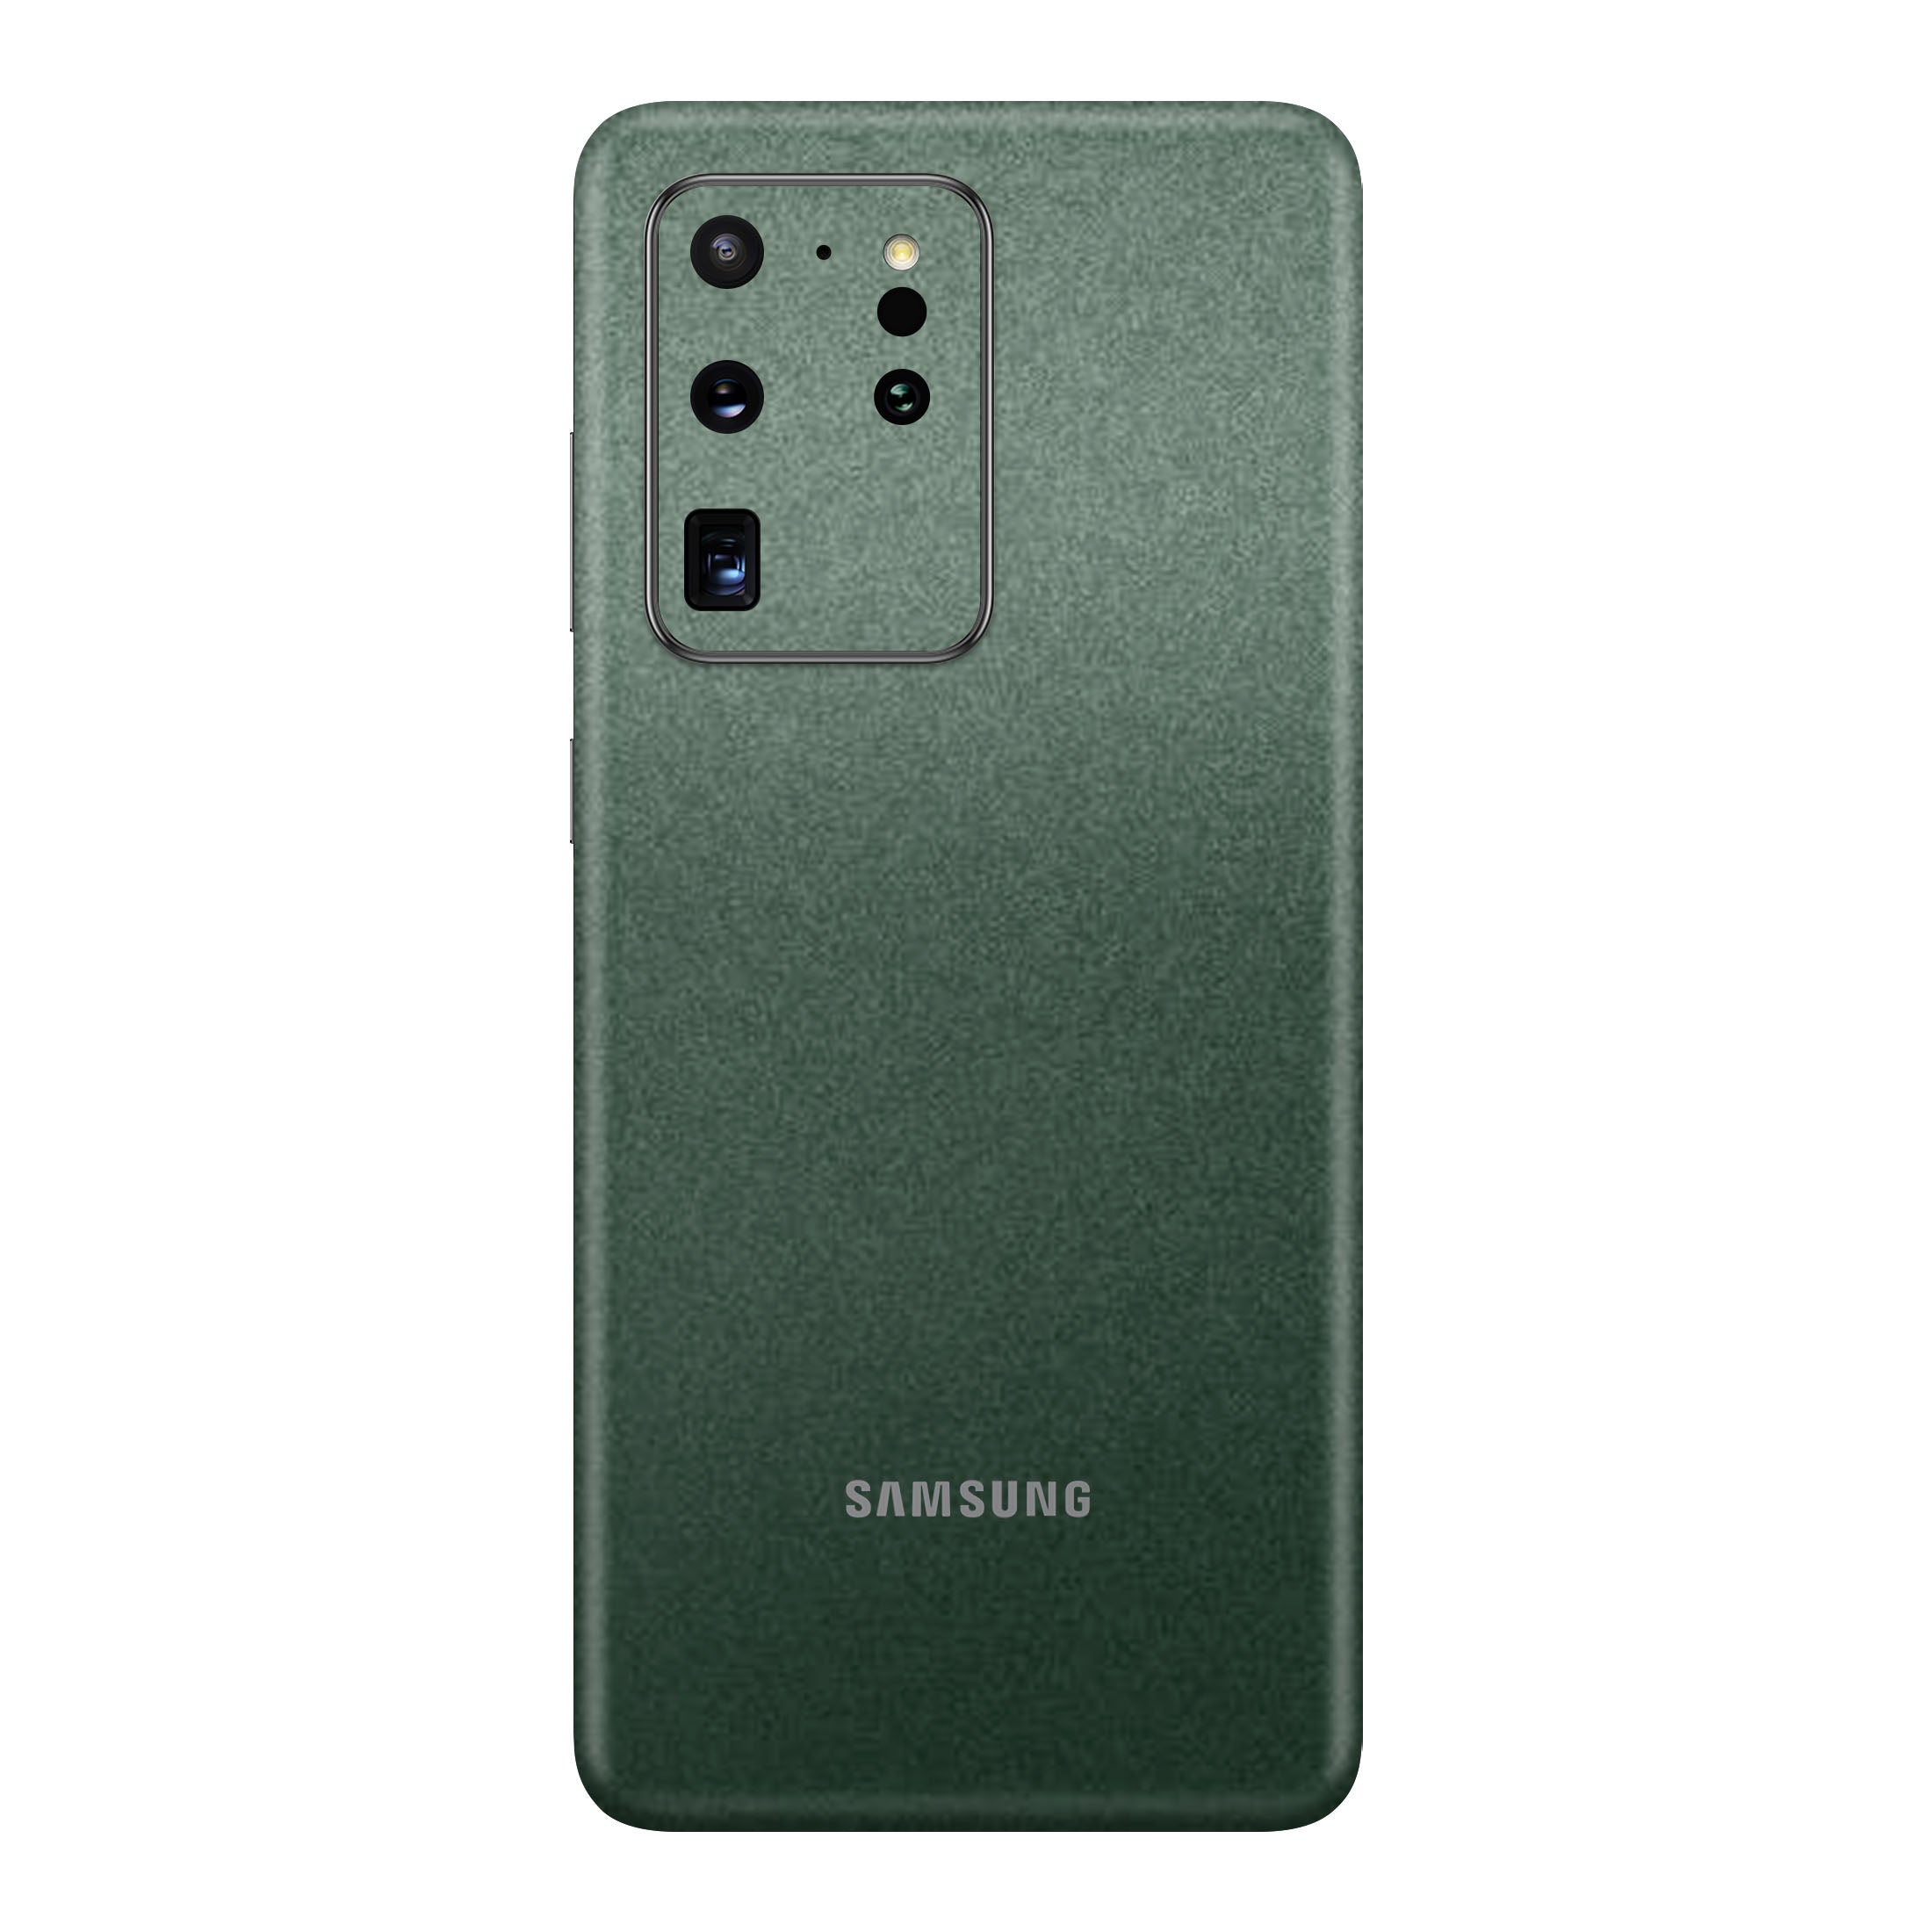 Pine Green Metallic Skin for Samsung S20 Ultra